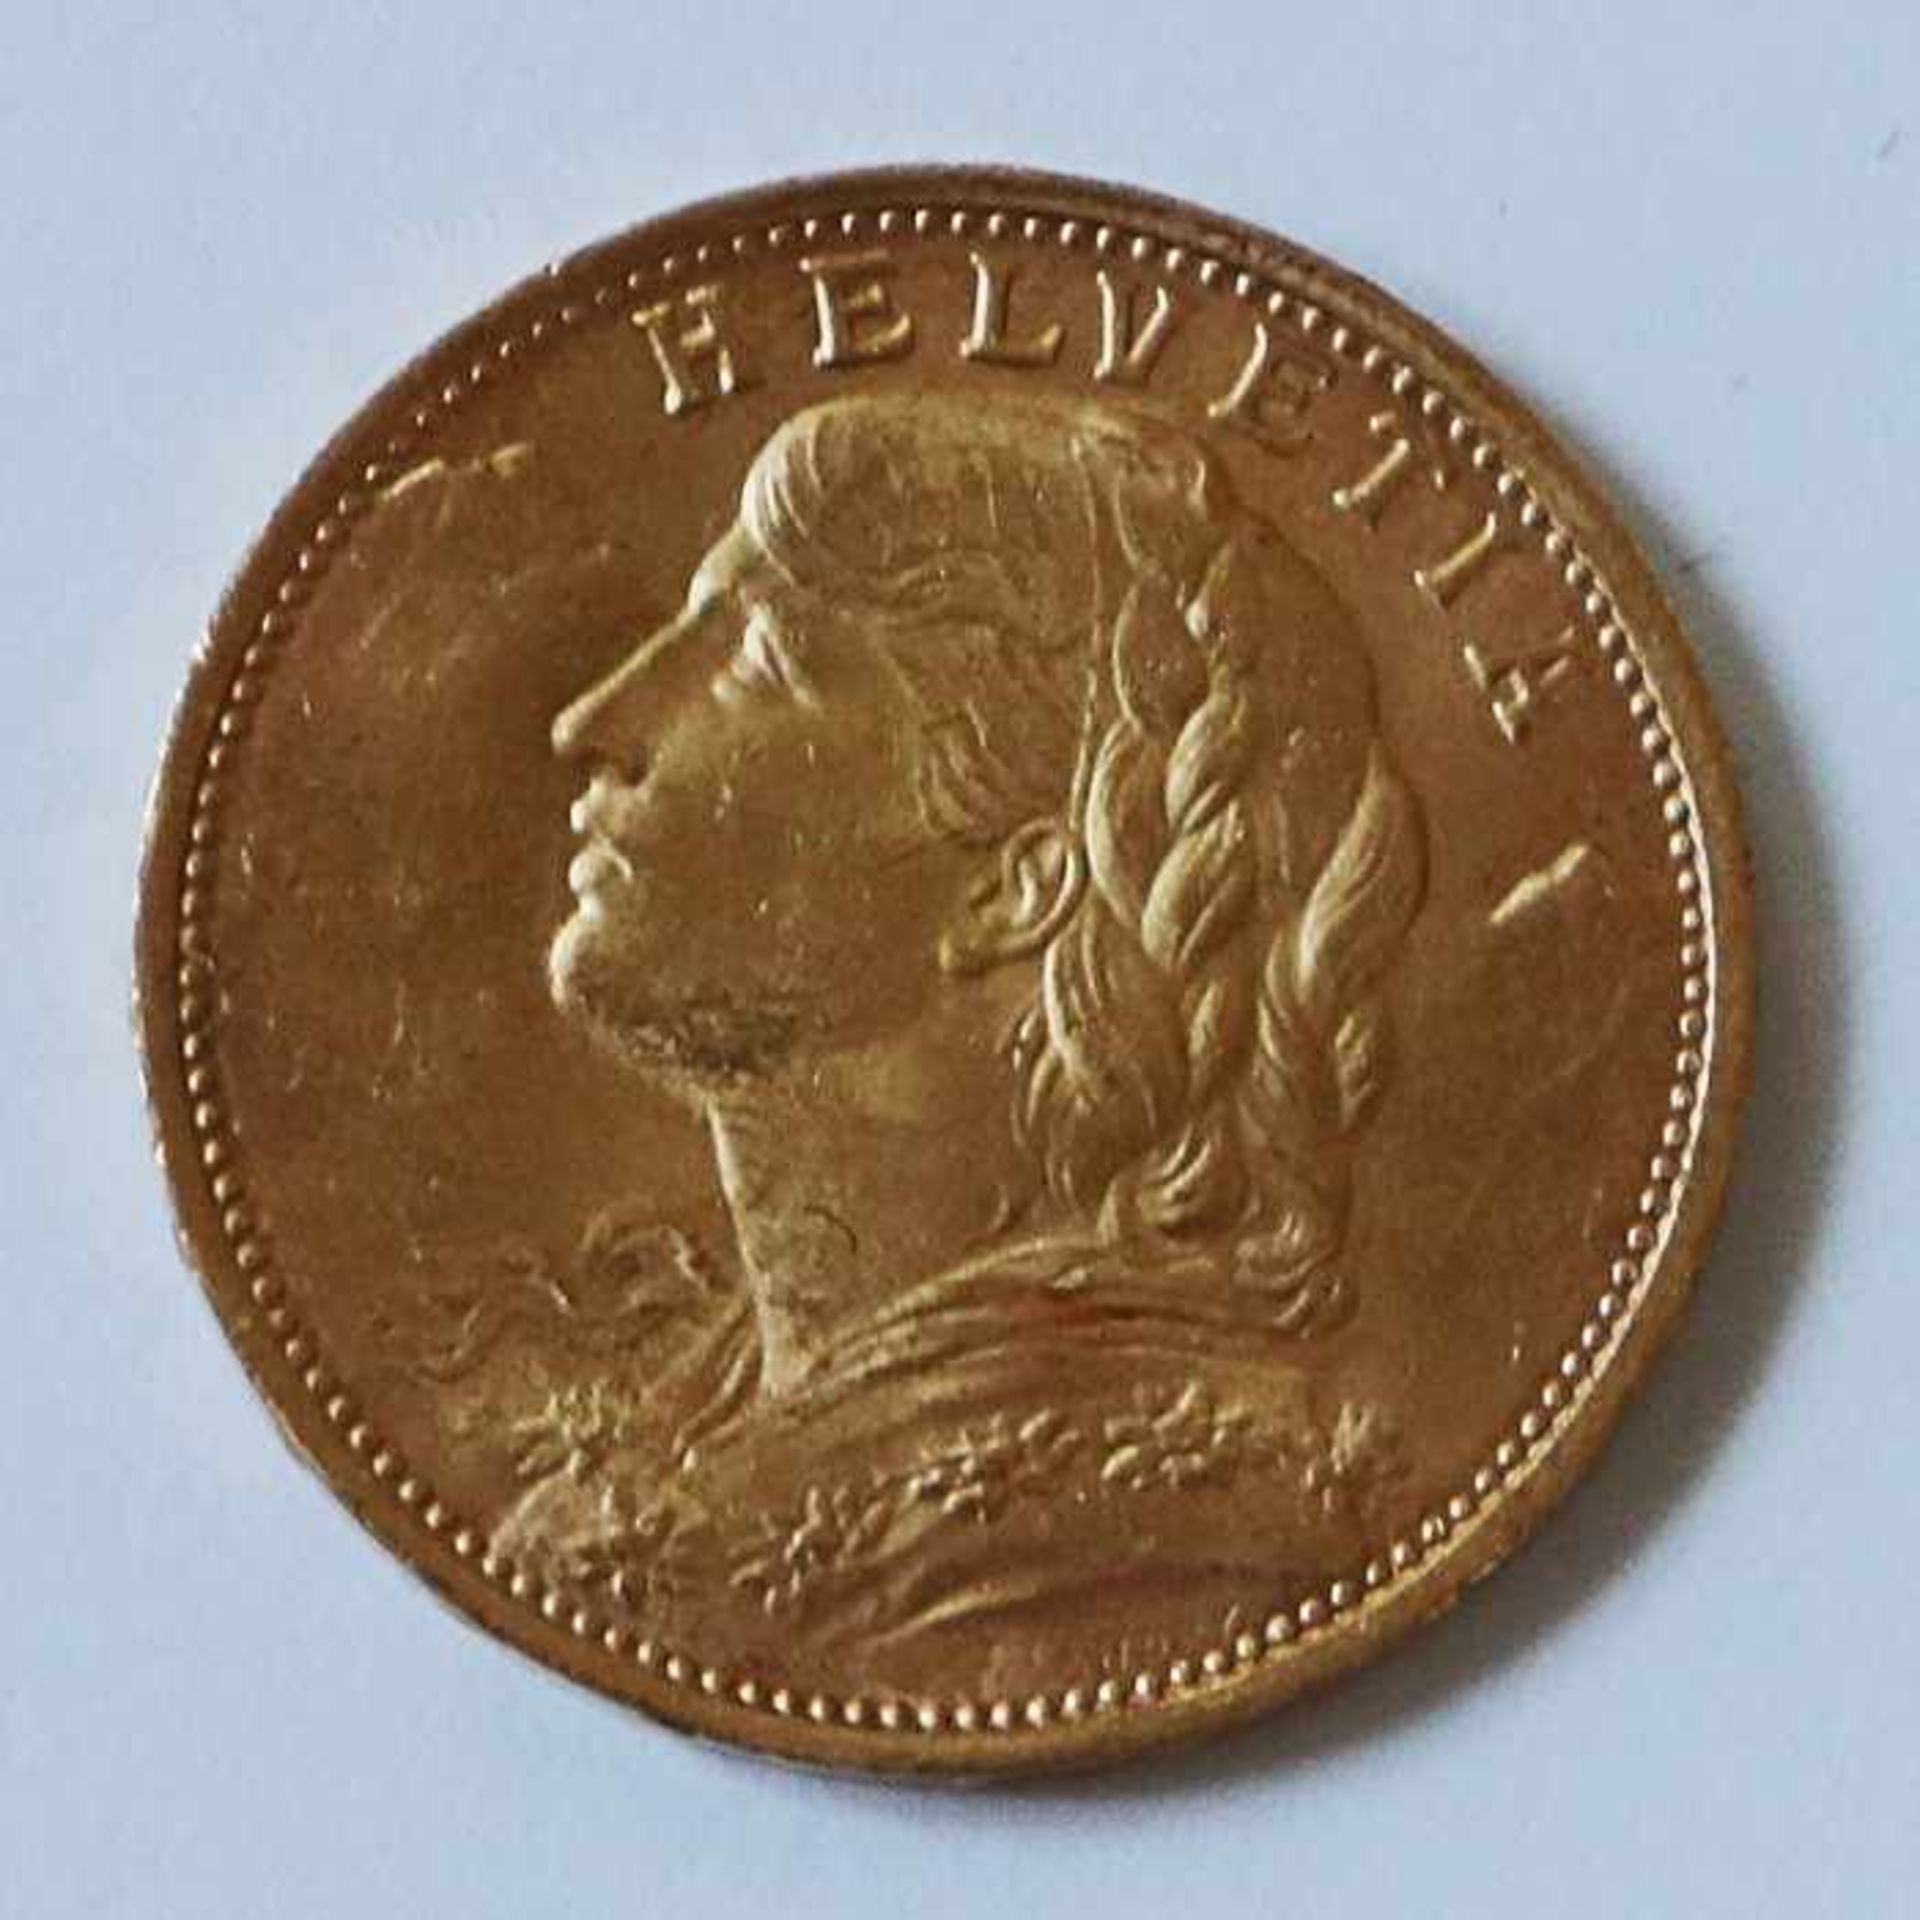 Gold - Schweiz 20 Franken 1935Schweizer Vreneli, LB, D 21mm, G 6,45g, vz